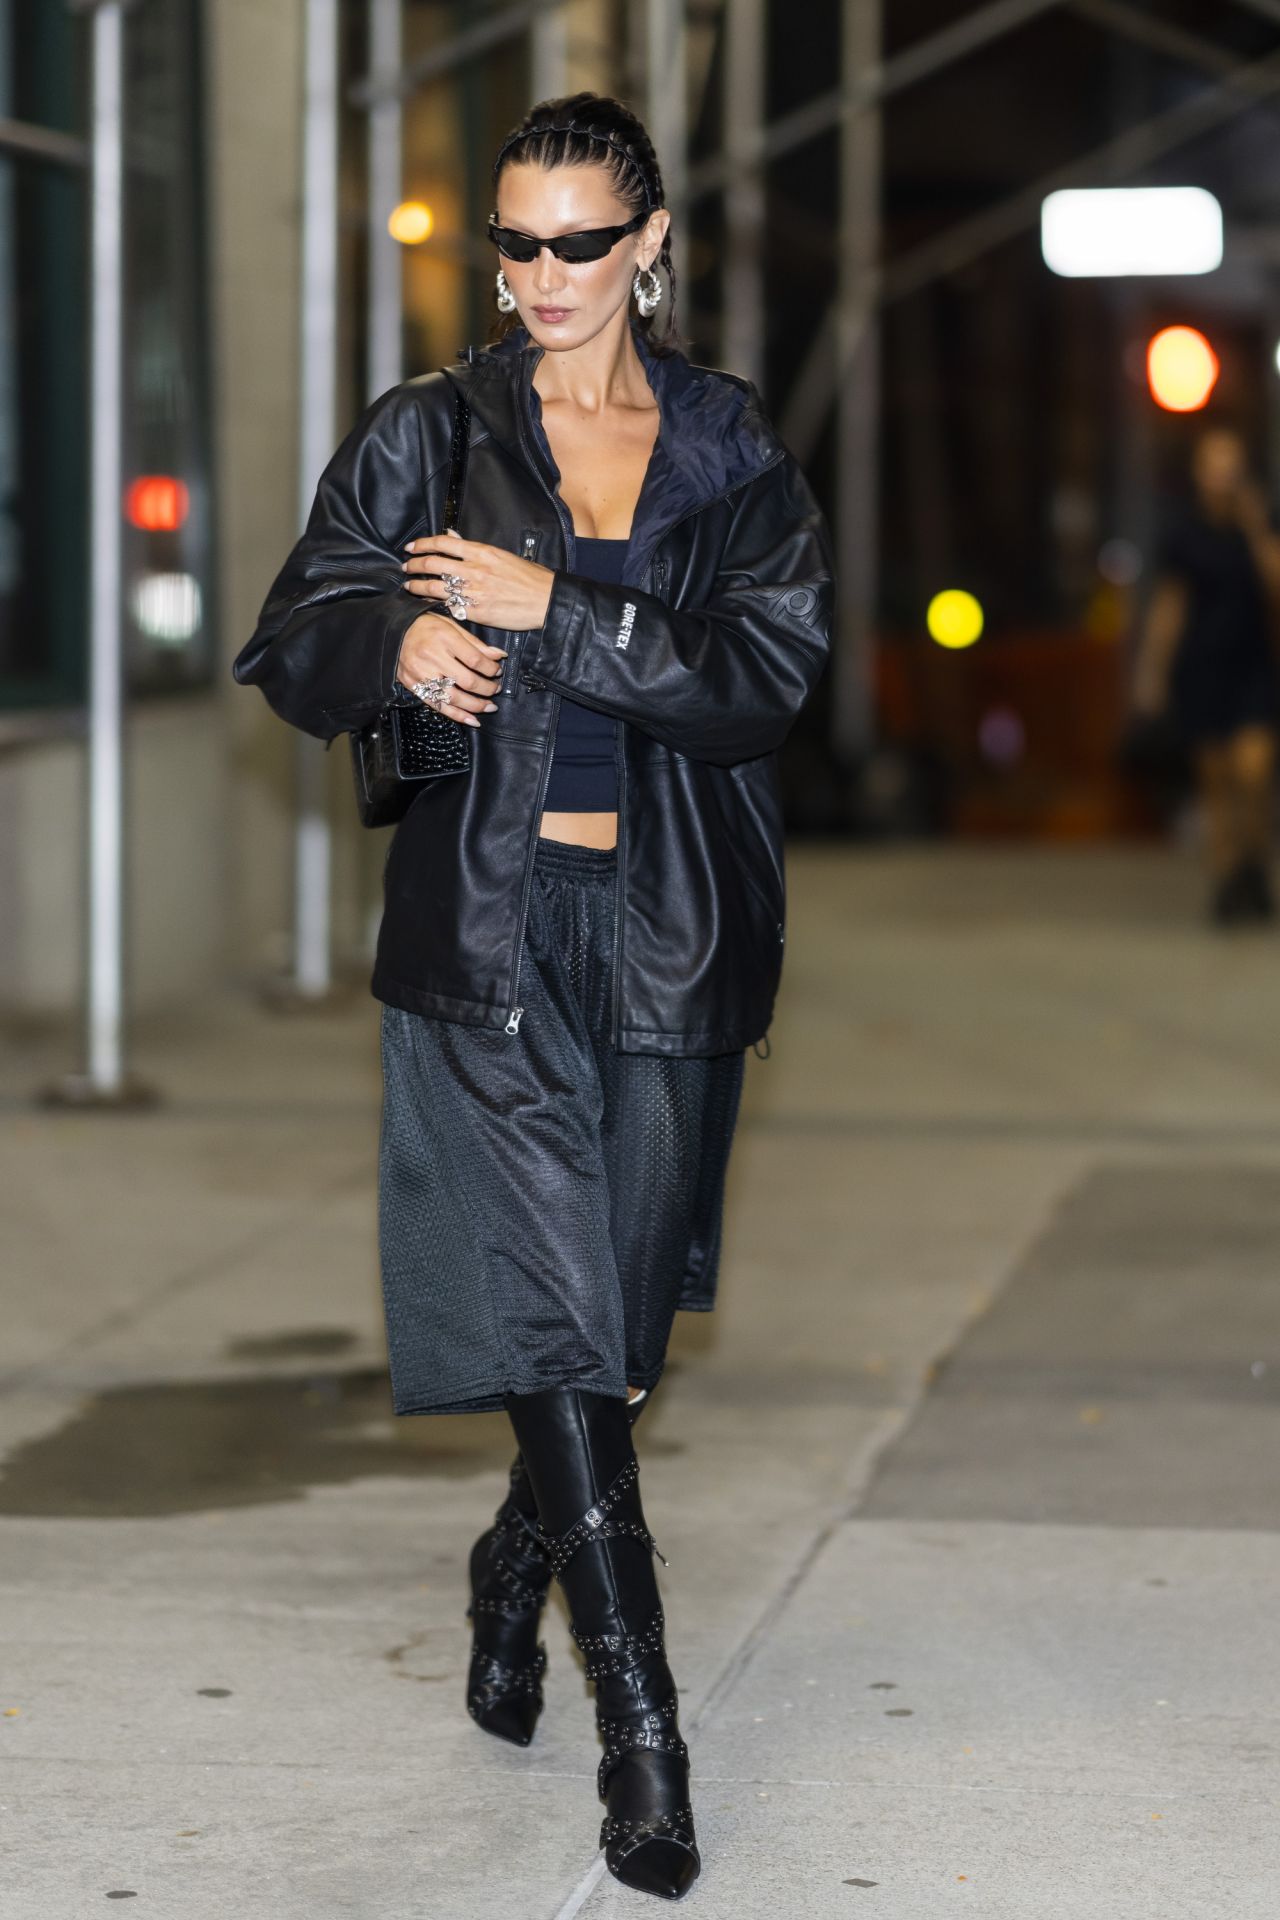 Bella Hadid New York City July 22, 2019 – Star Style